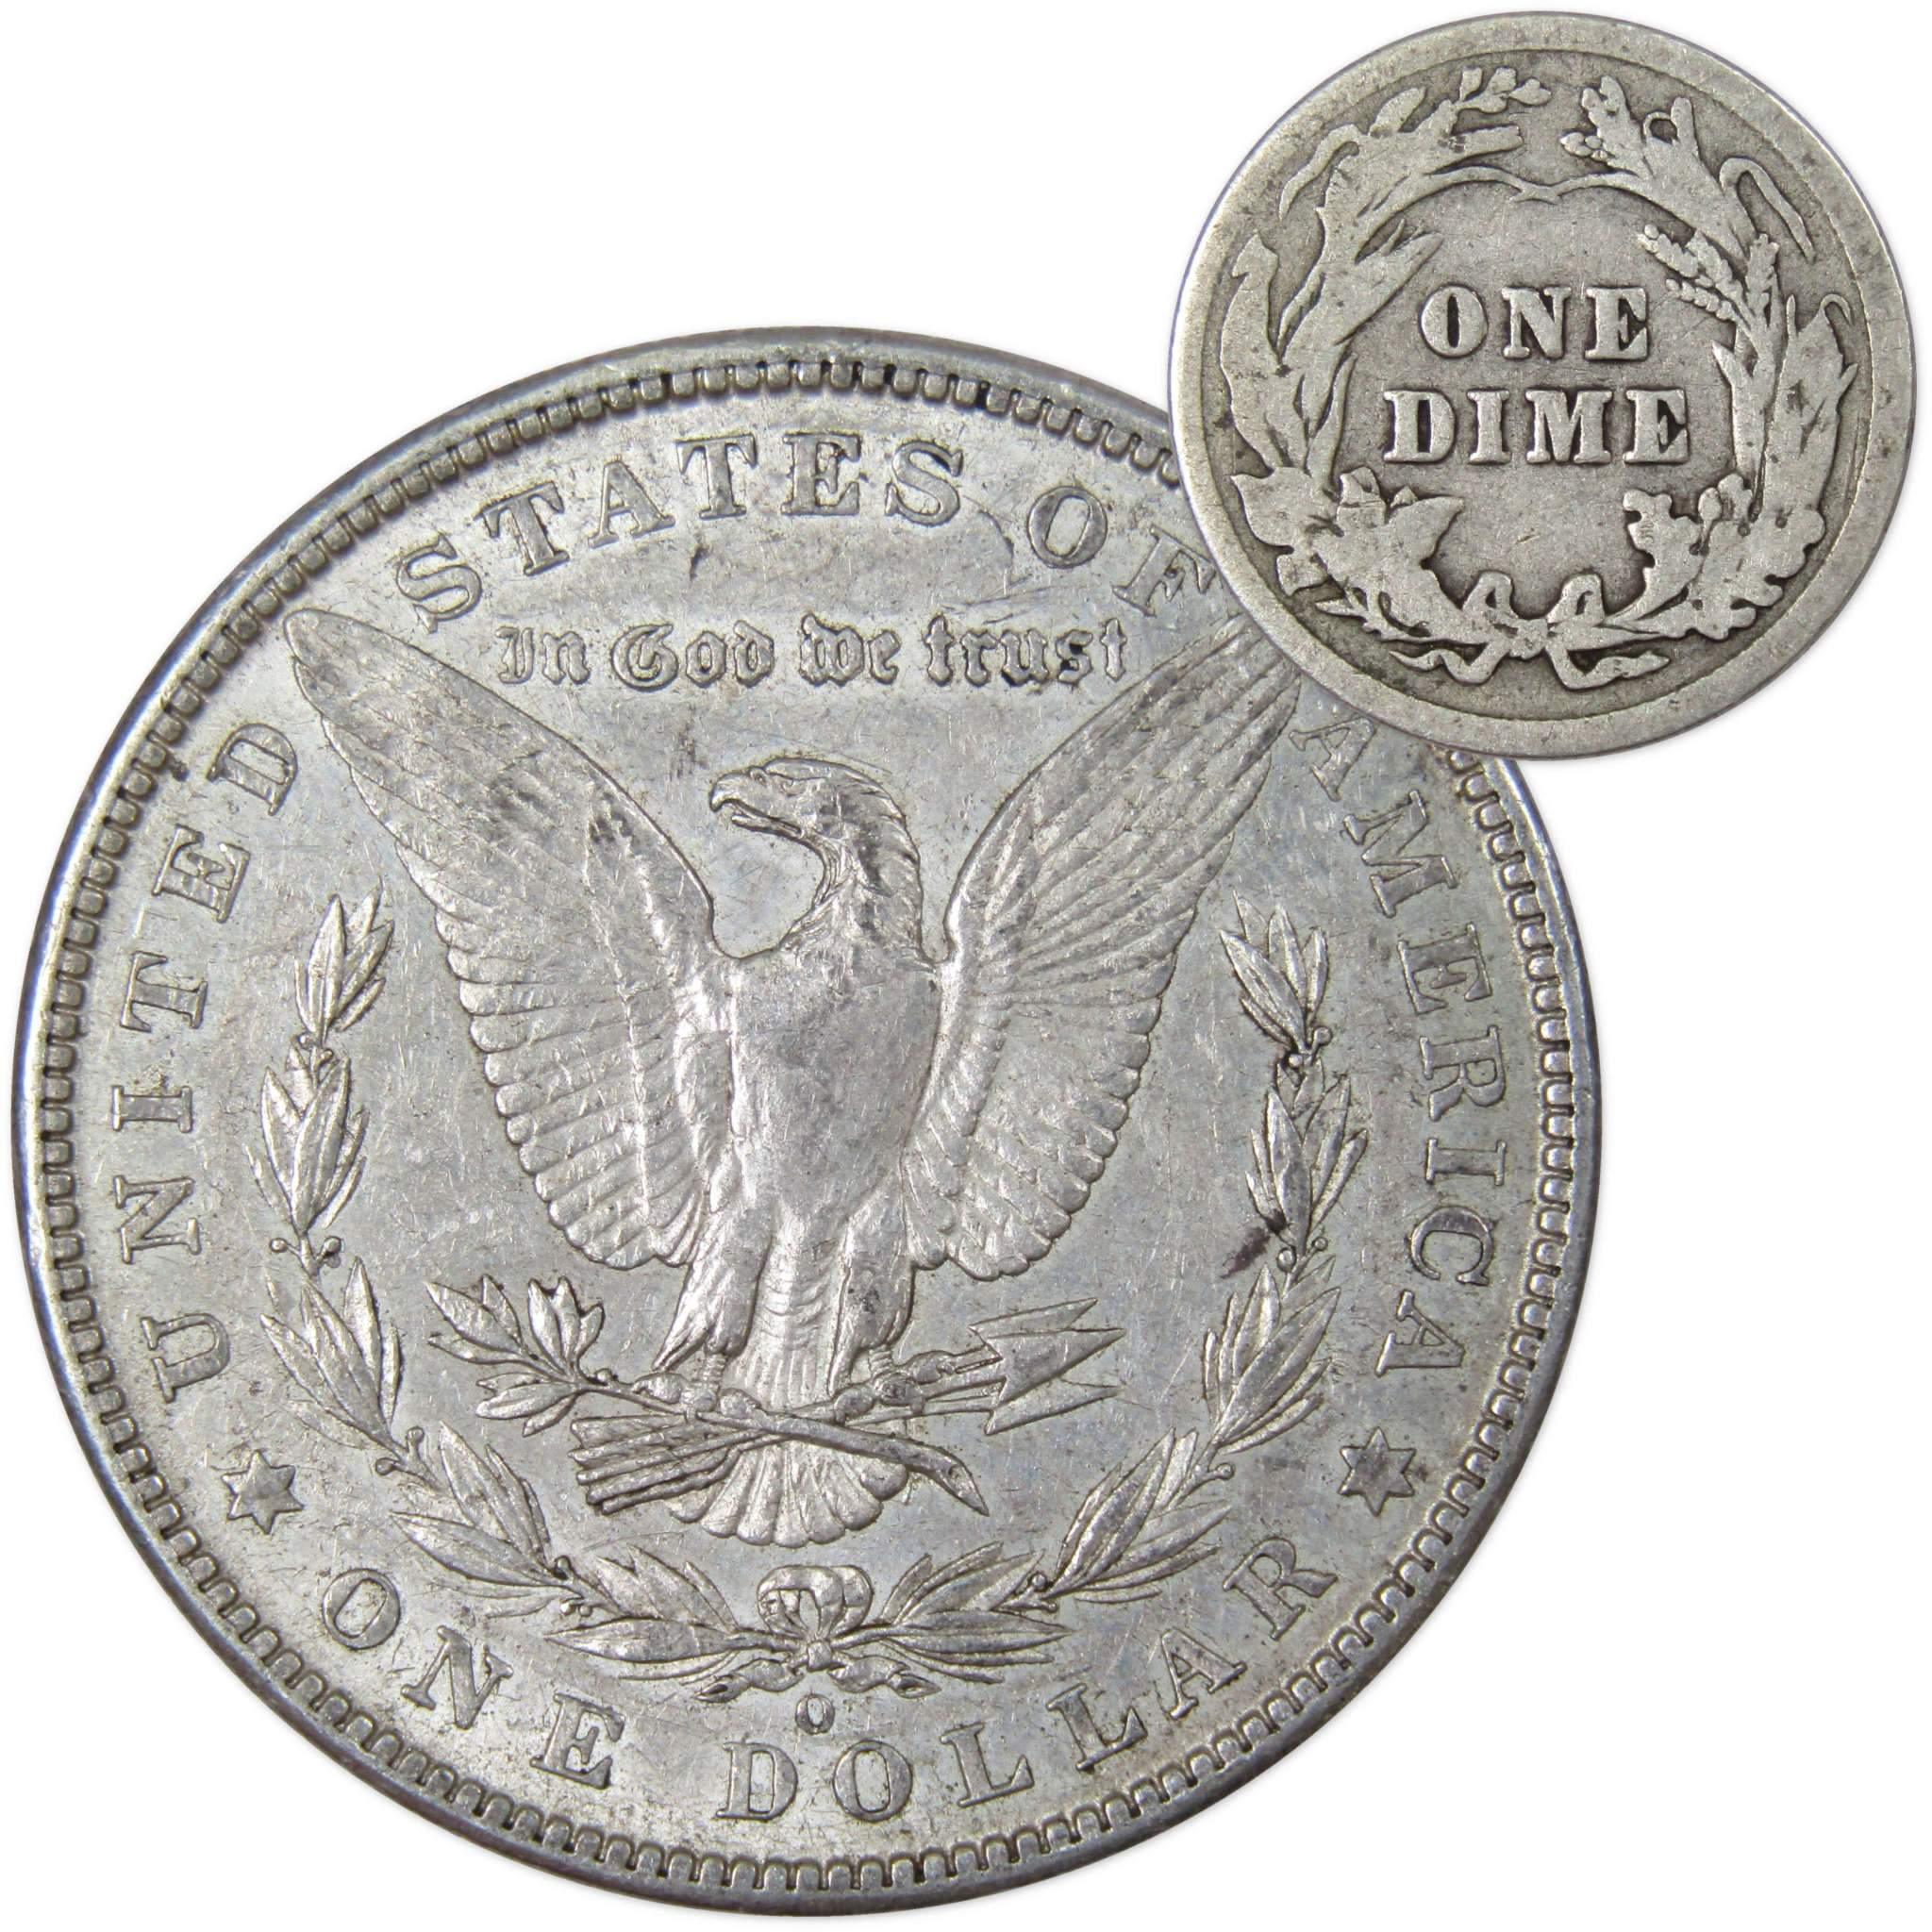 1901 O Morgan Dollar XF EF Extremely Fine with 1913 Barber Dime G Good - Morgan coin - Morgan silver dollar - Morgan silver dollar for sale - Profile Coins &amp; Collectibles